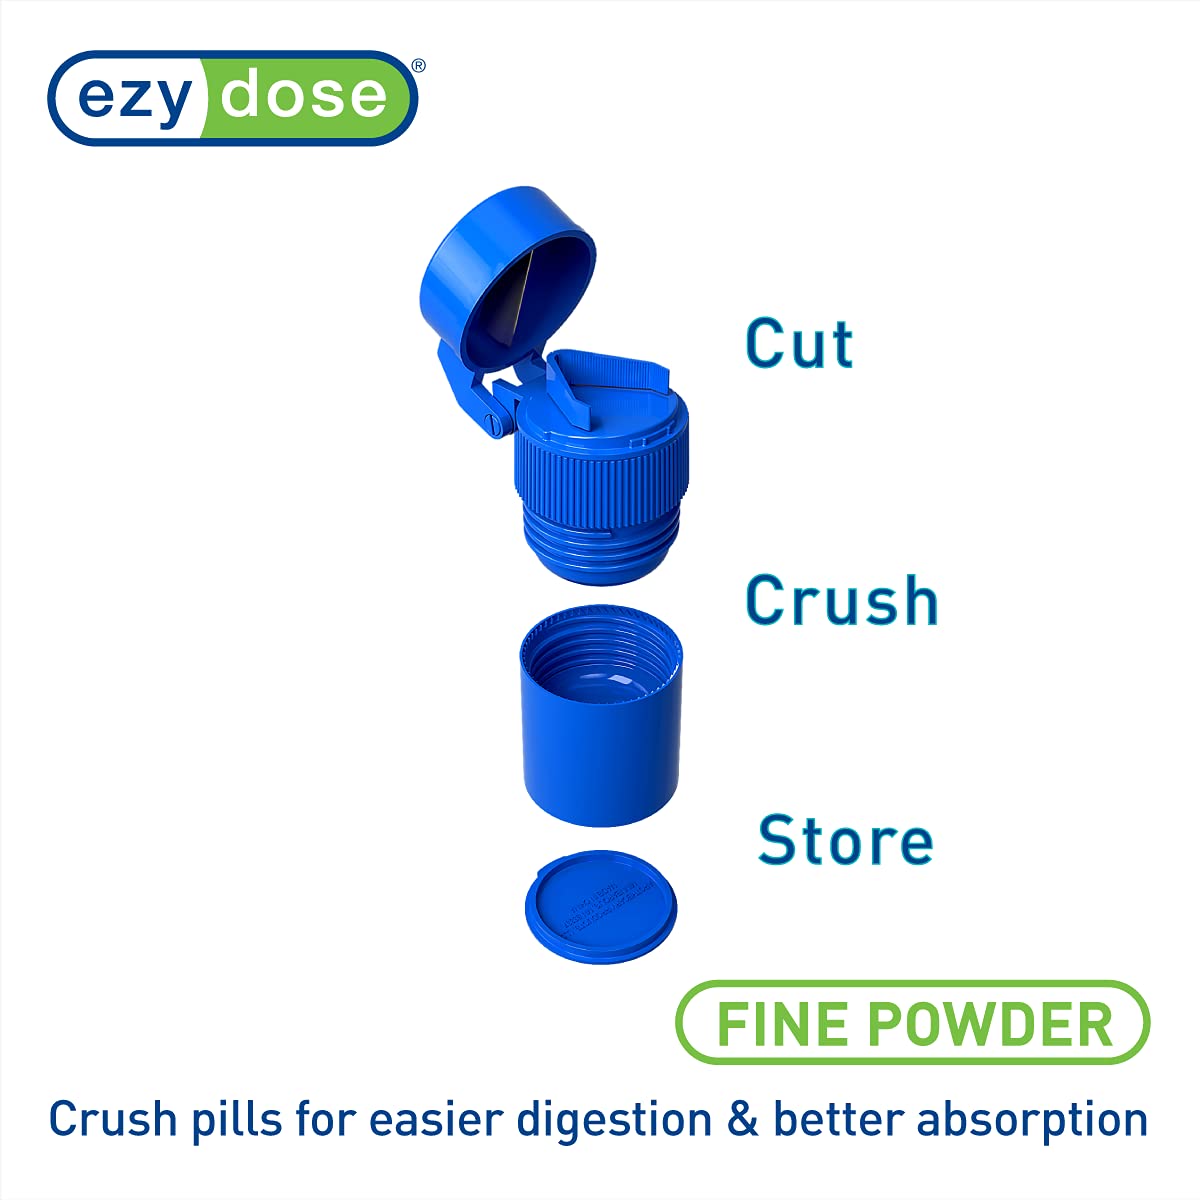 EZY DOSE Cut N' Crush │ Pill Cutter│ Pill Crusher, Blue, 1 Count (Pack of 1), 67750